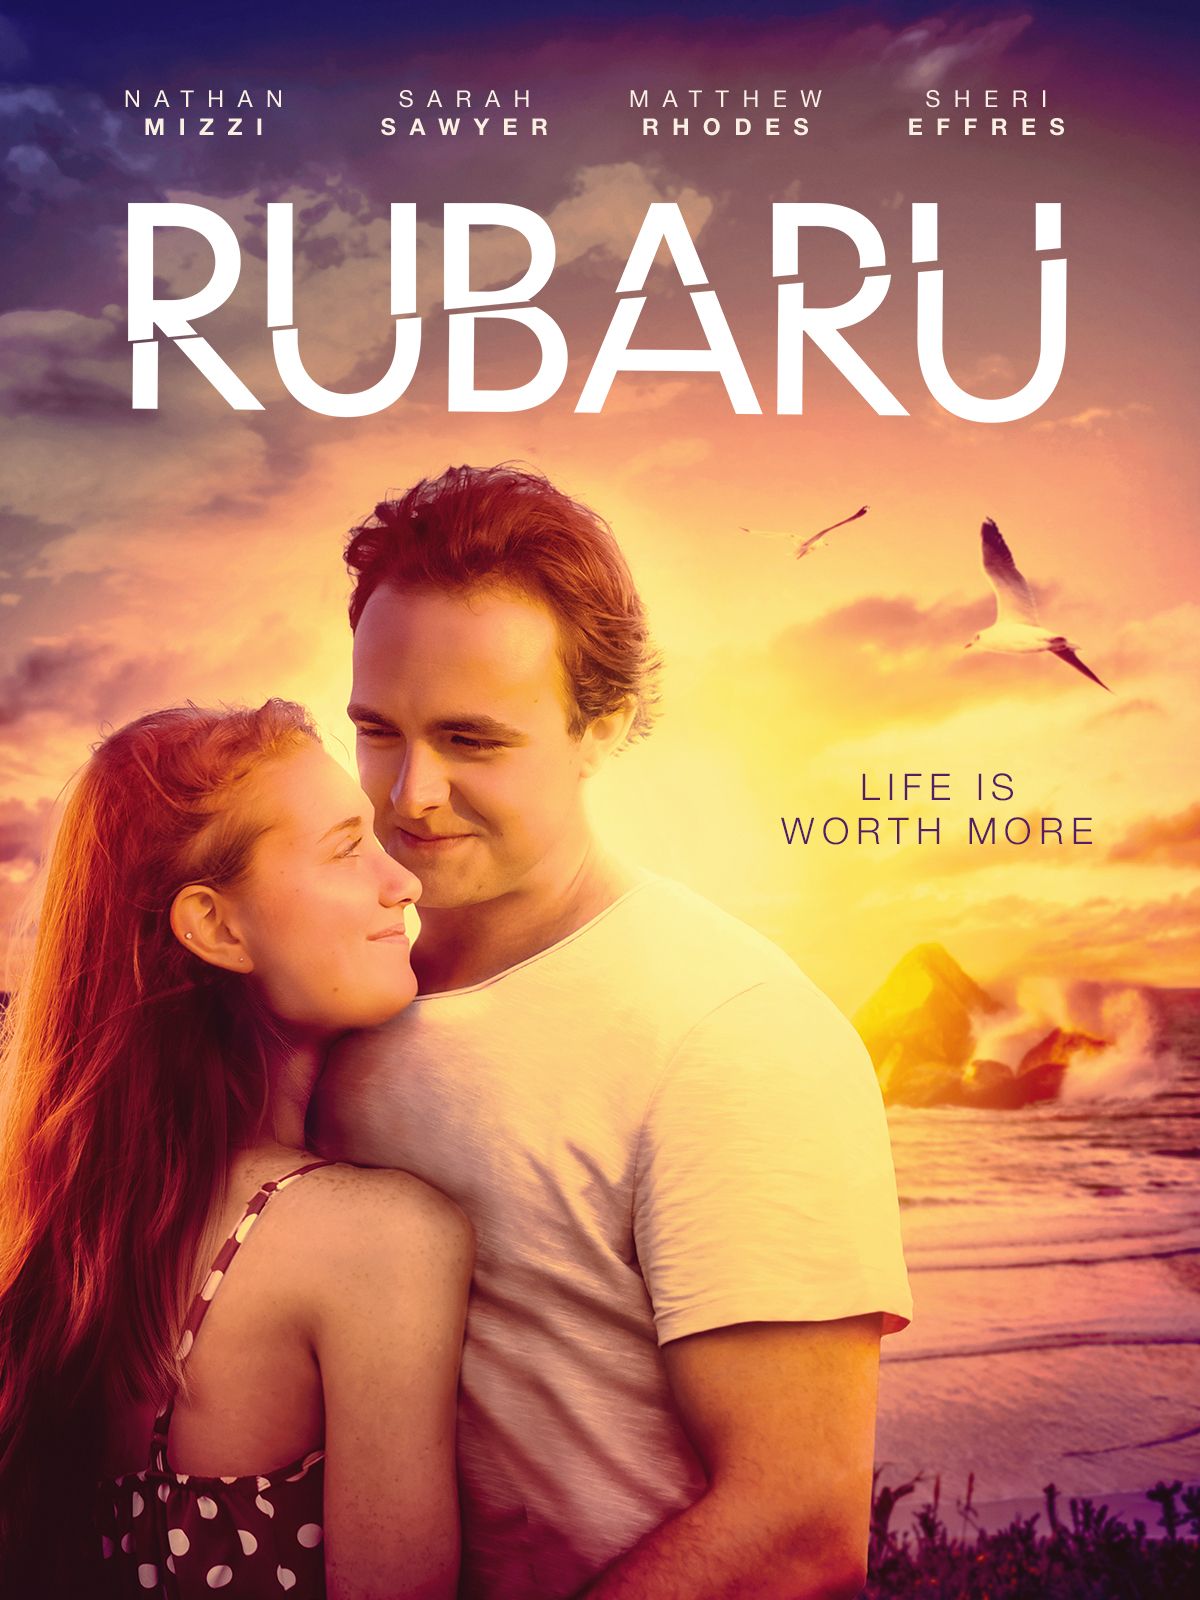 Keyart for the movie Rubaru